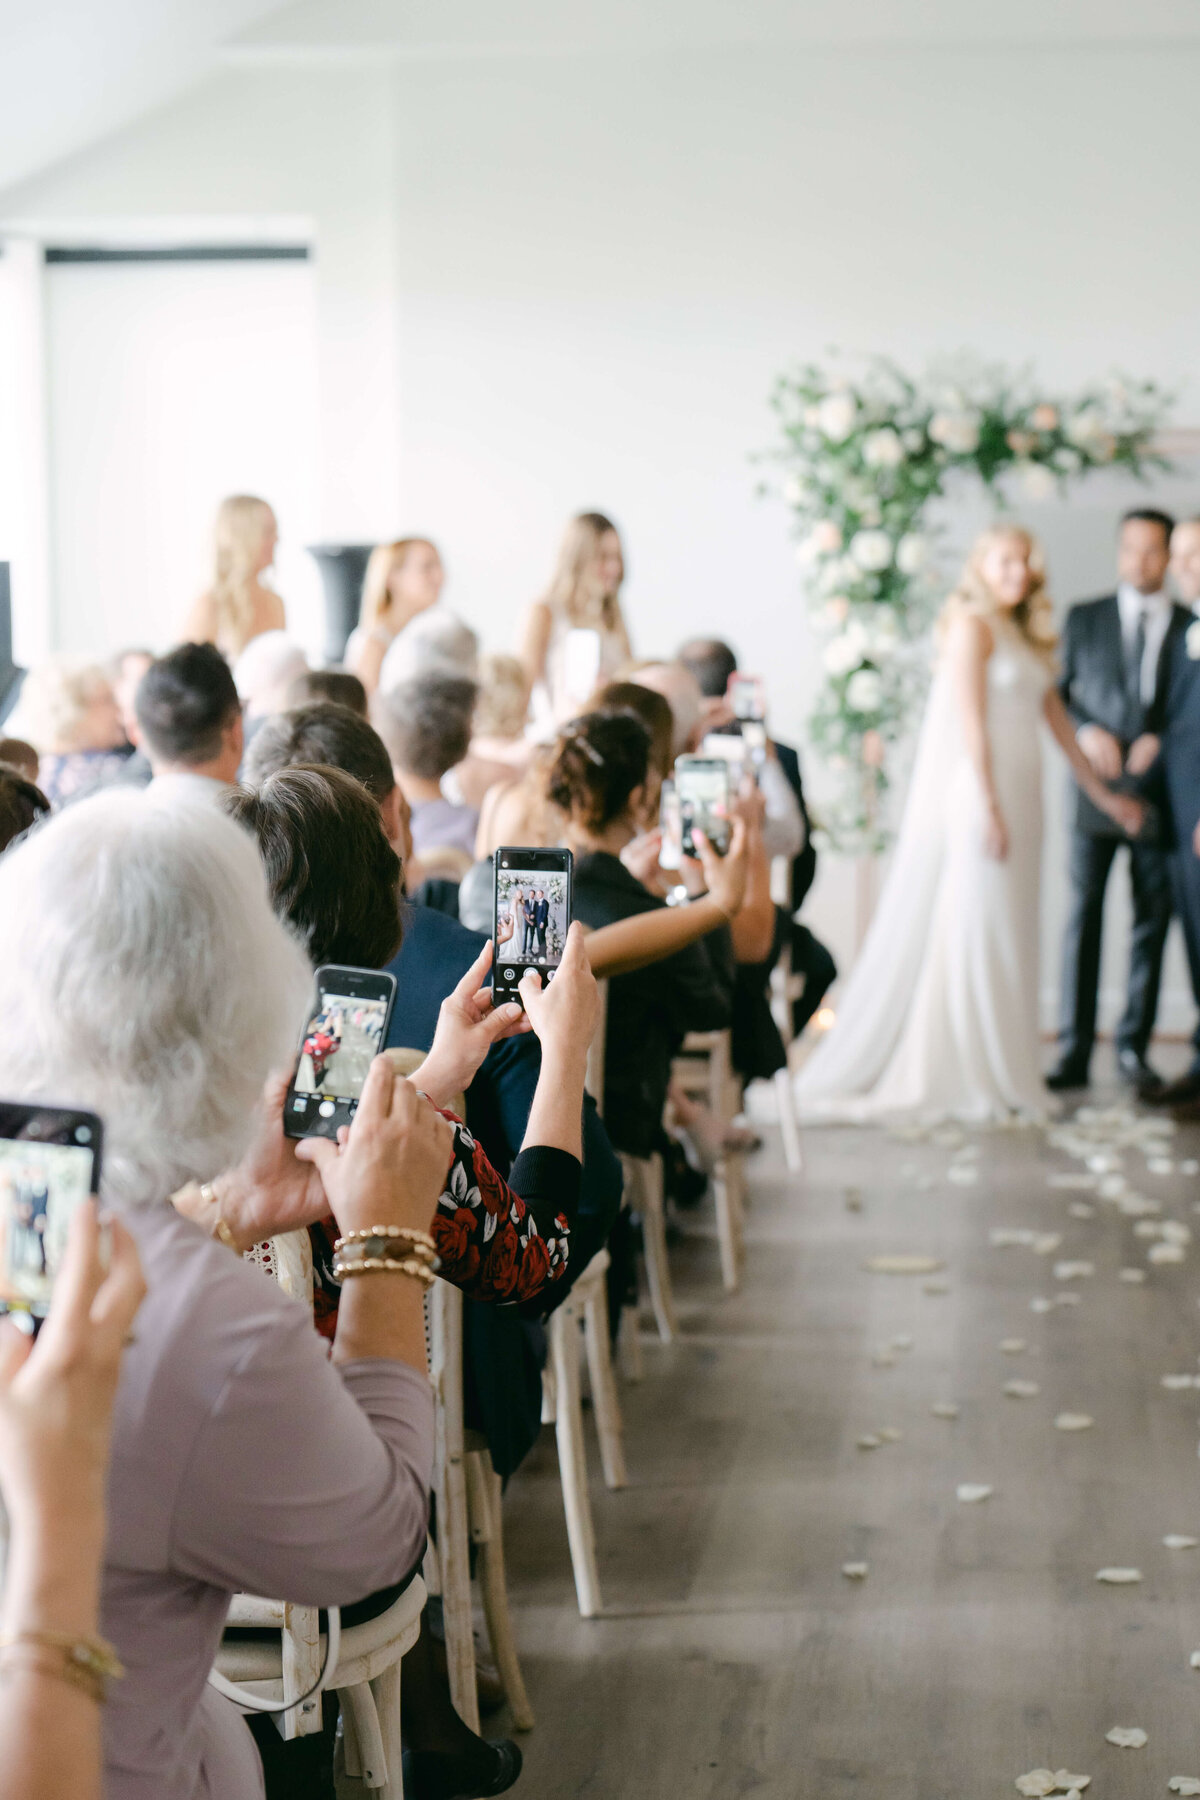 People use phones to photograph wedding.